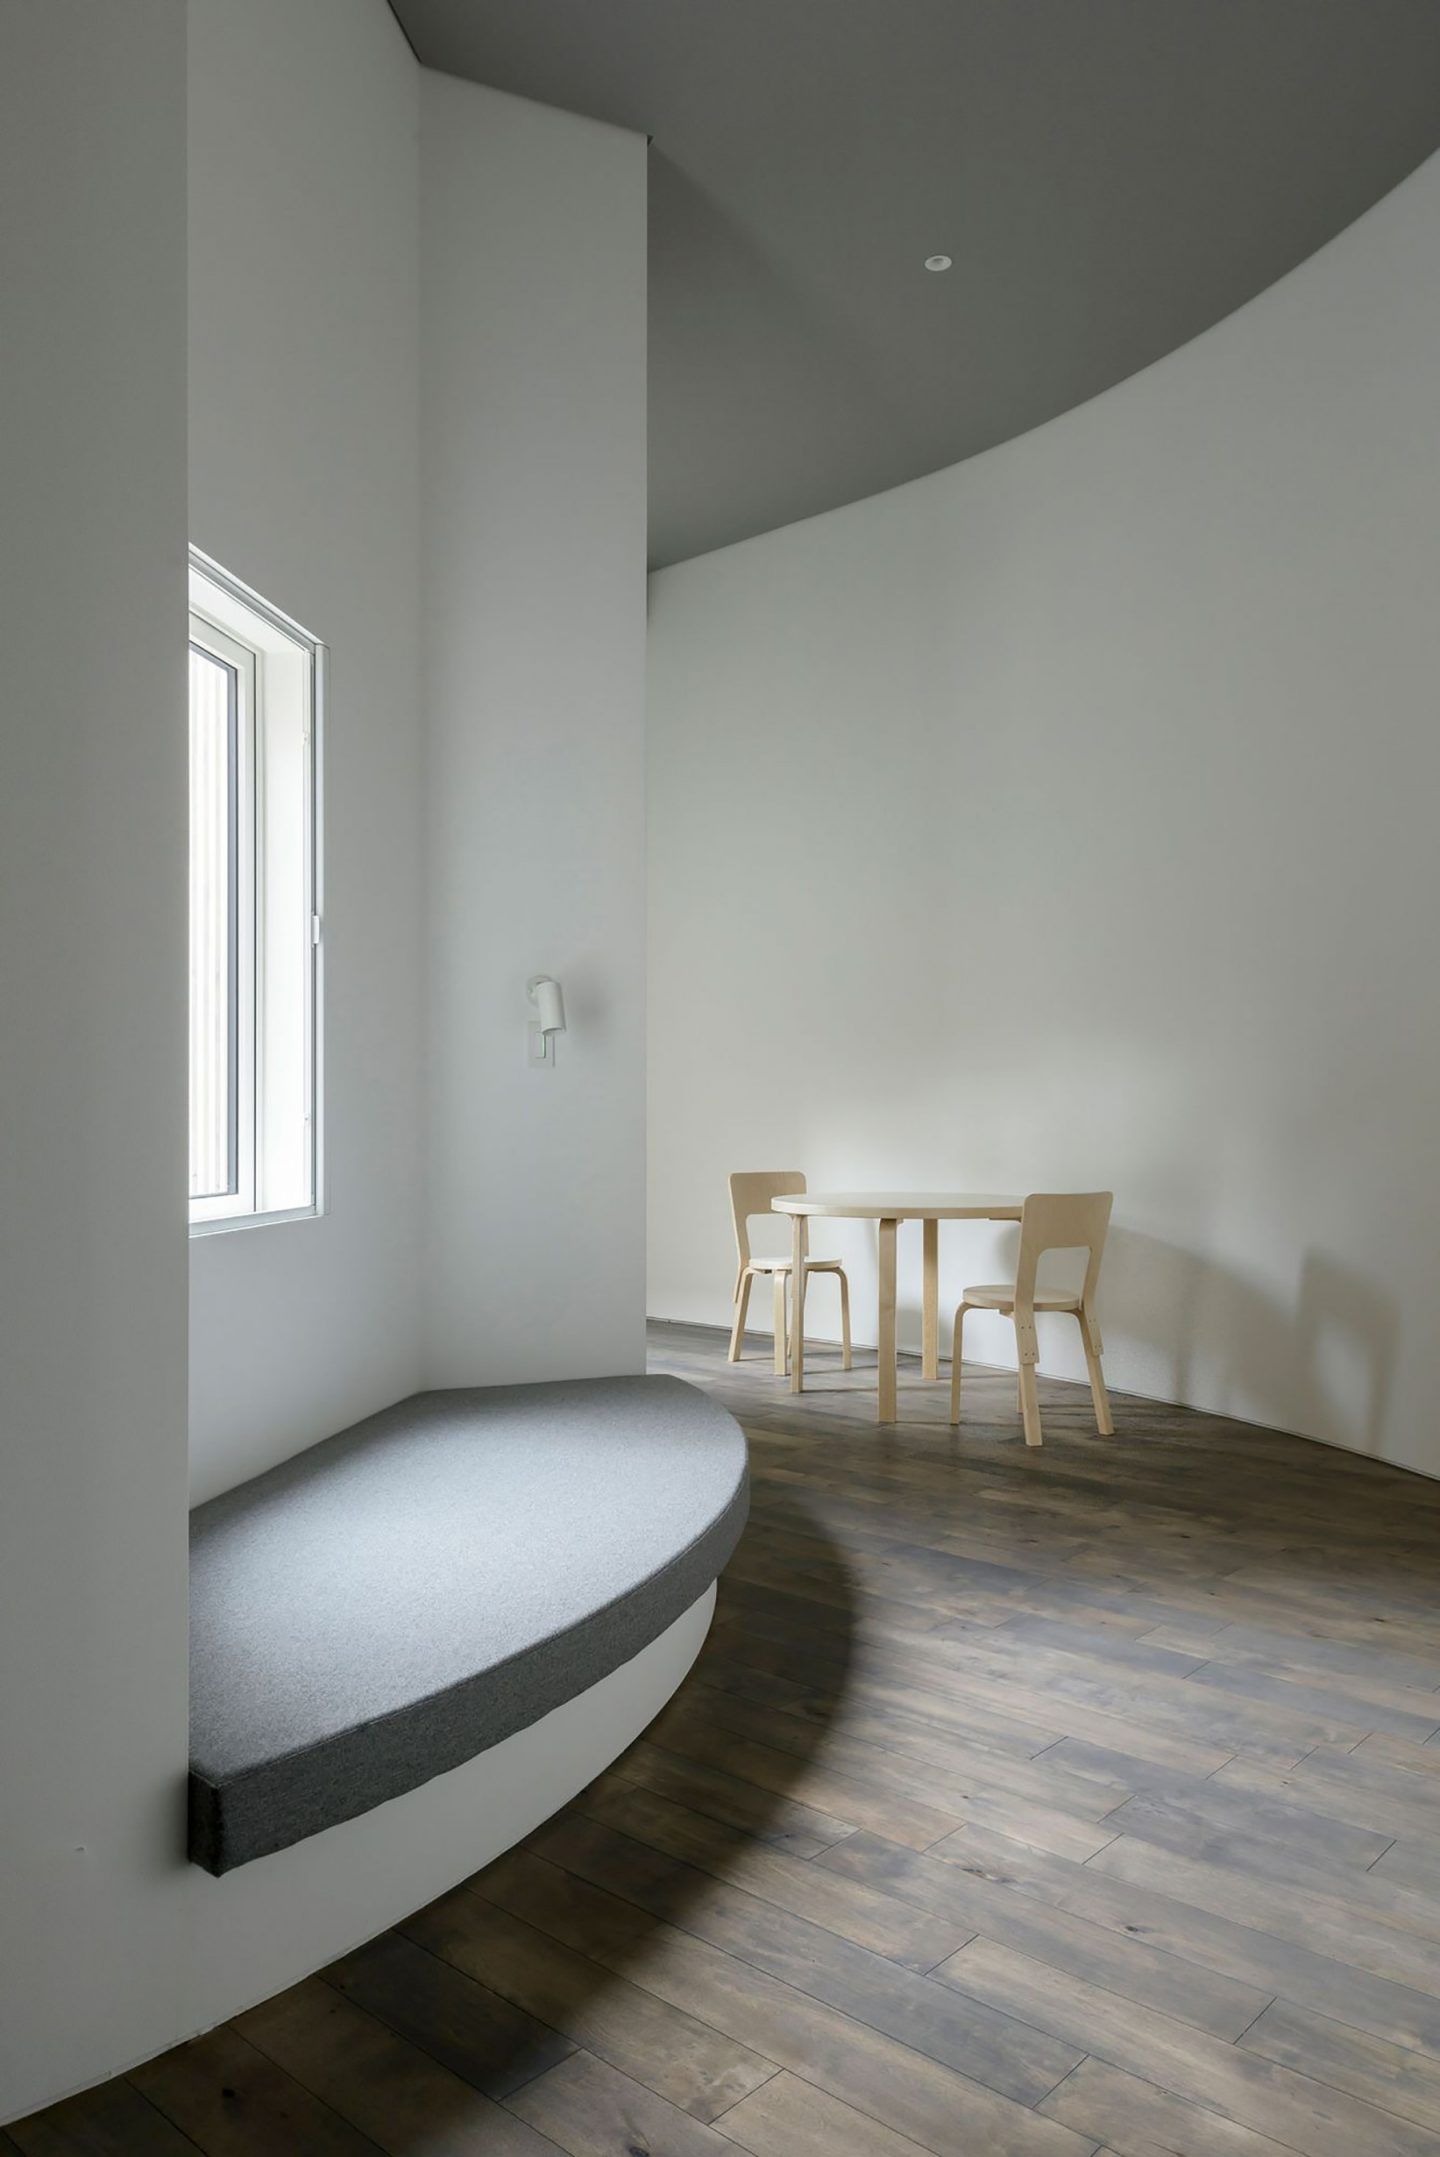 IGNANT-Architecture-Jun-Igarashi-Corridor-Of-The-Fold-19